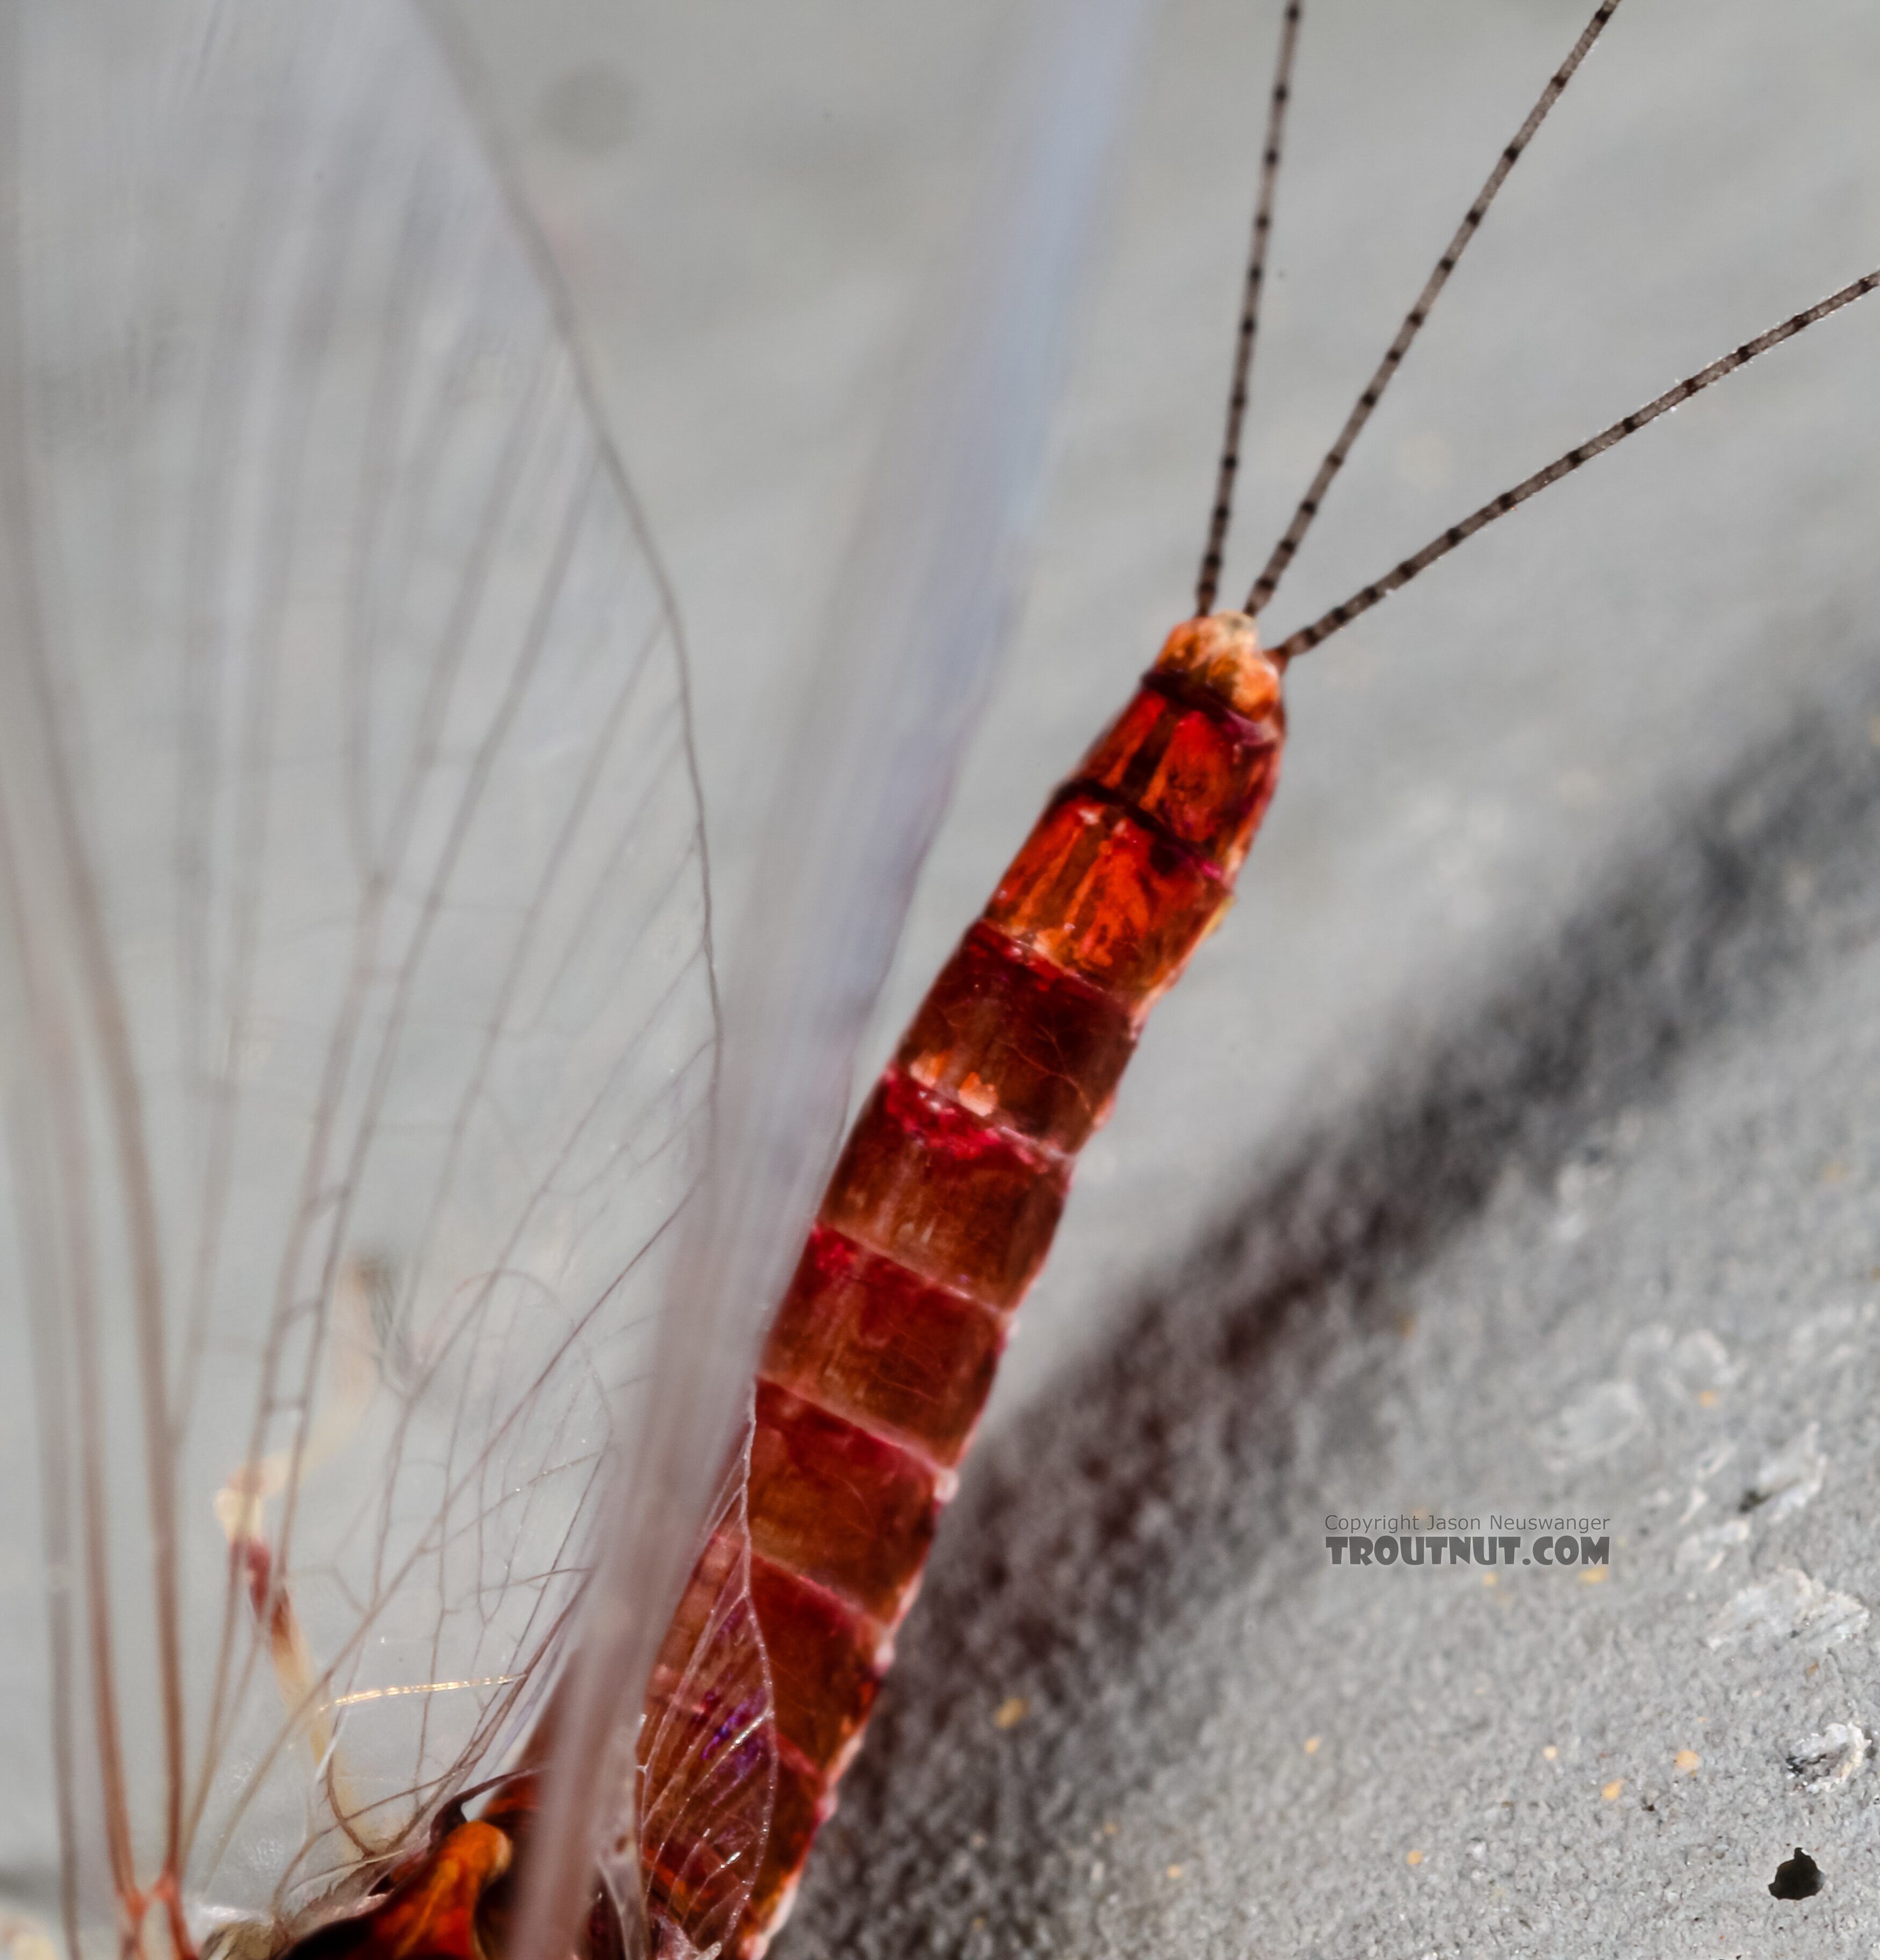 Female Ephemerellidae (Hendricksons, Sulphurs, PMDs, BWOs) Mayfly Spinner from Mystery Creek #237 in Montana